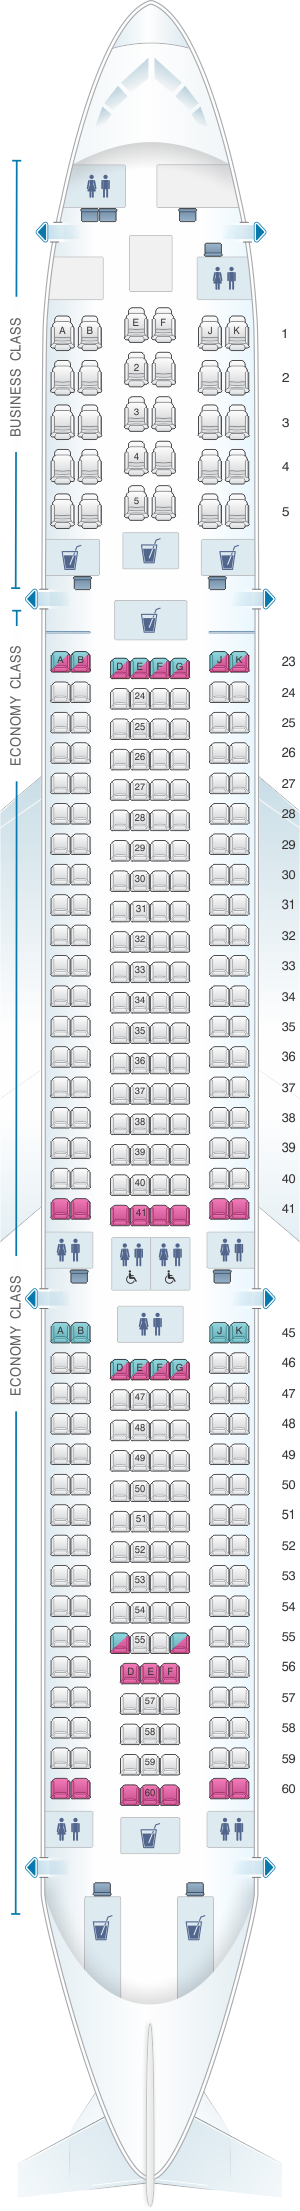 Qantas Airbus A330 300 Seat Map